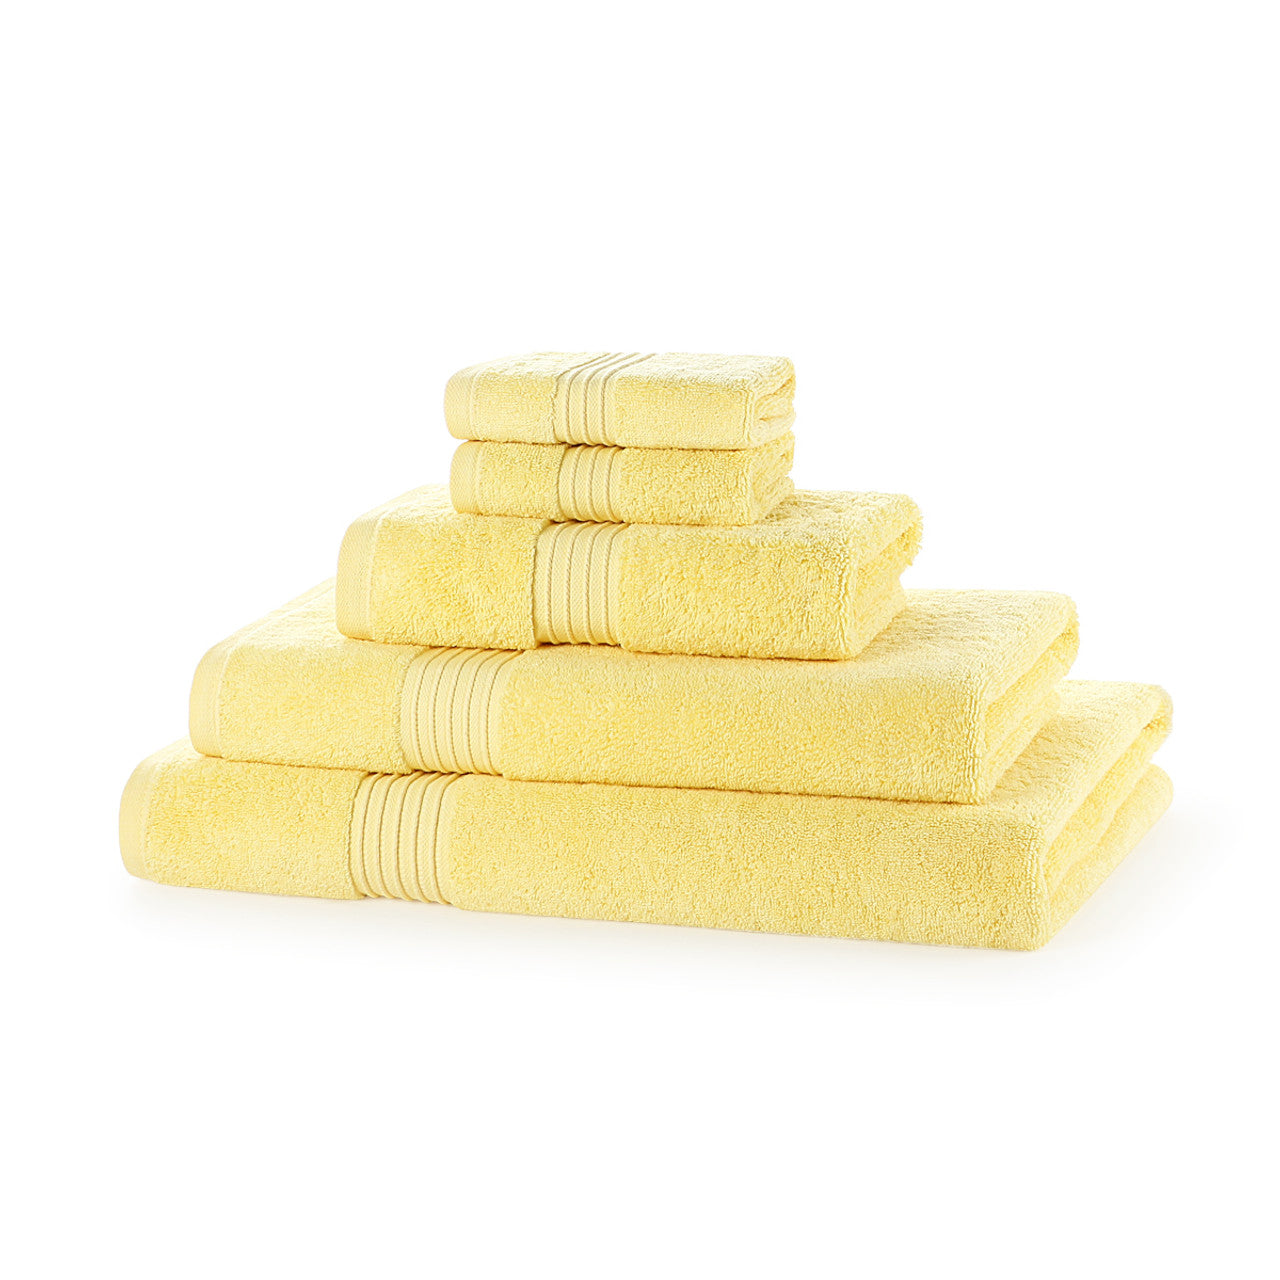 Egyptian Cotton 5 Piece Towel Bale 700 GSM - 2 Face Cloths, 1 Hand Towel, 1 Bath Towel, 1 Bath Sheet